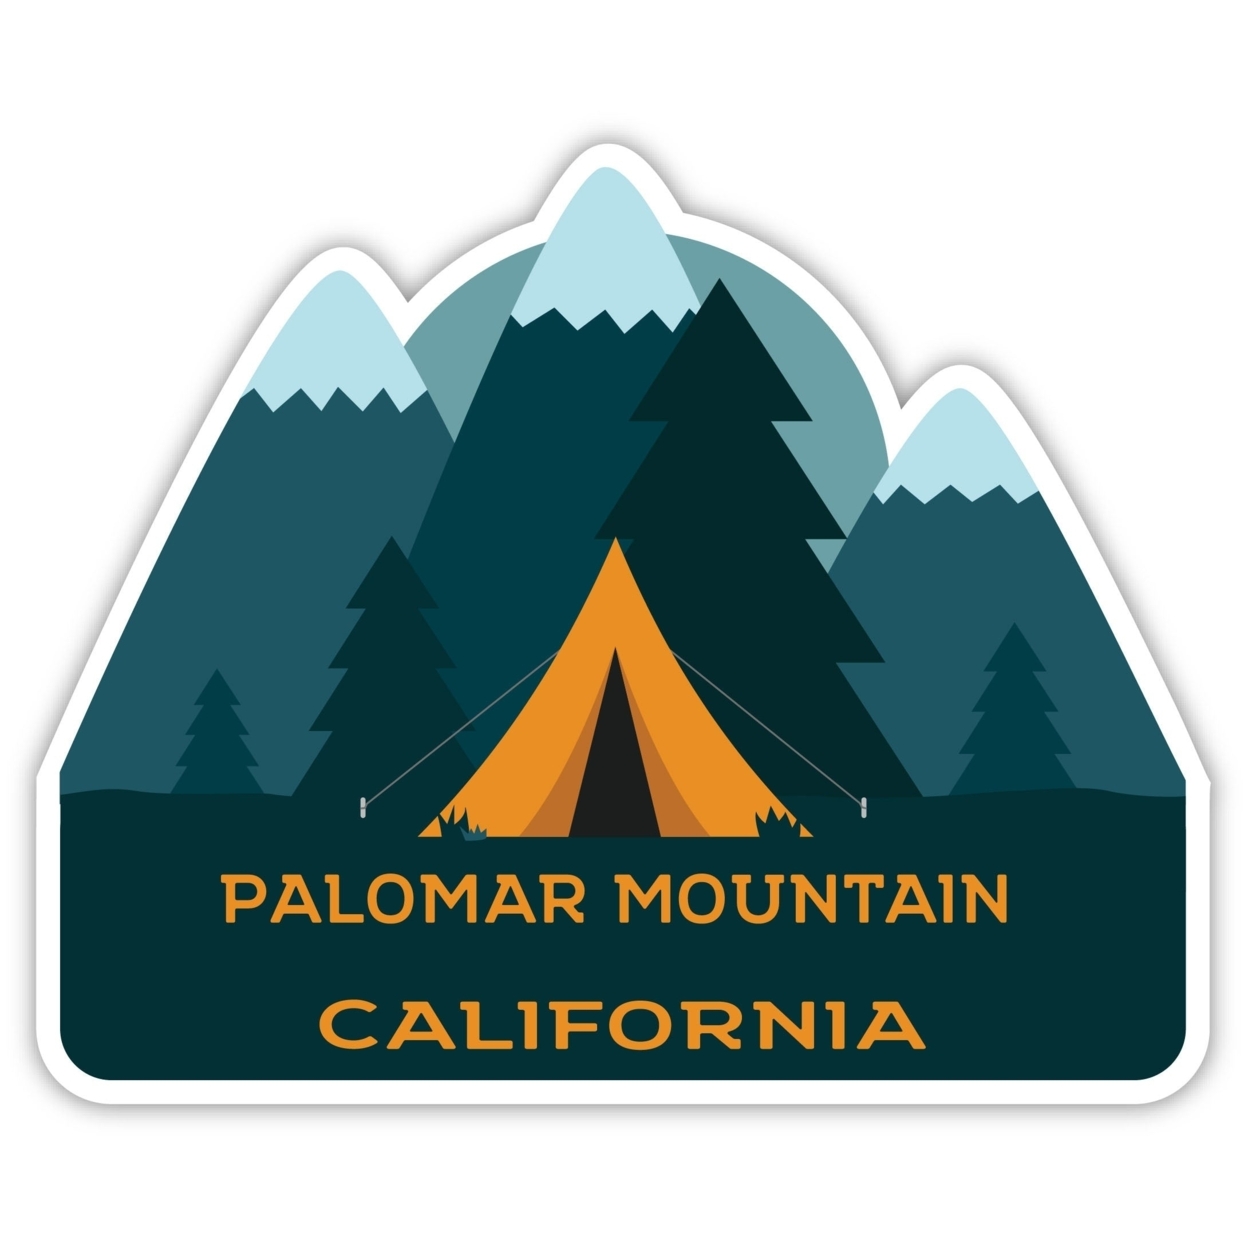 Palomar Mountain California Souvenir Decorative Stickers (Choose Theme And Size) - Single Unit, 2-Inch, Tent